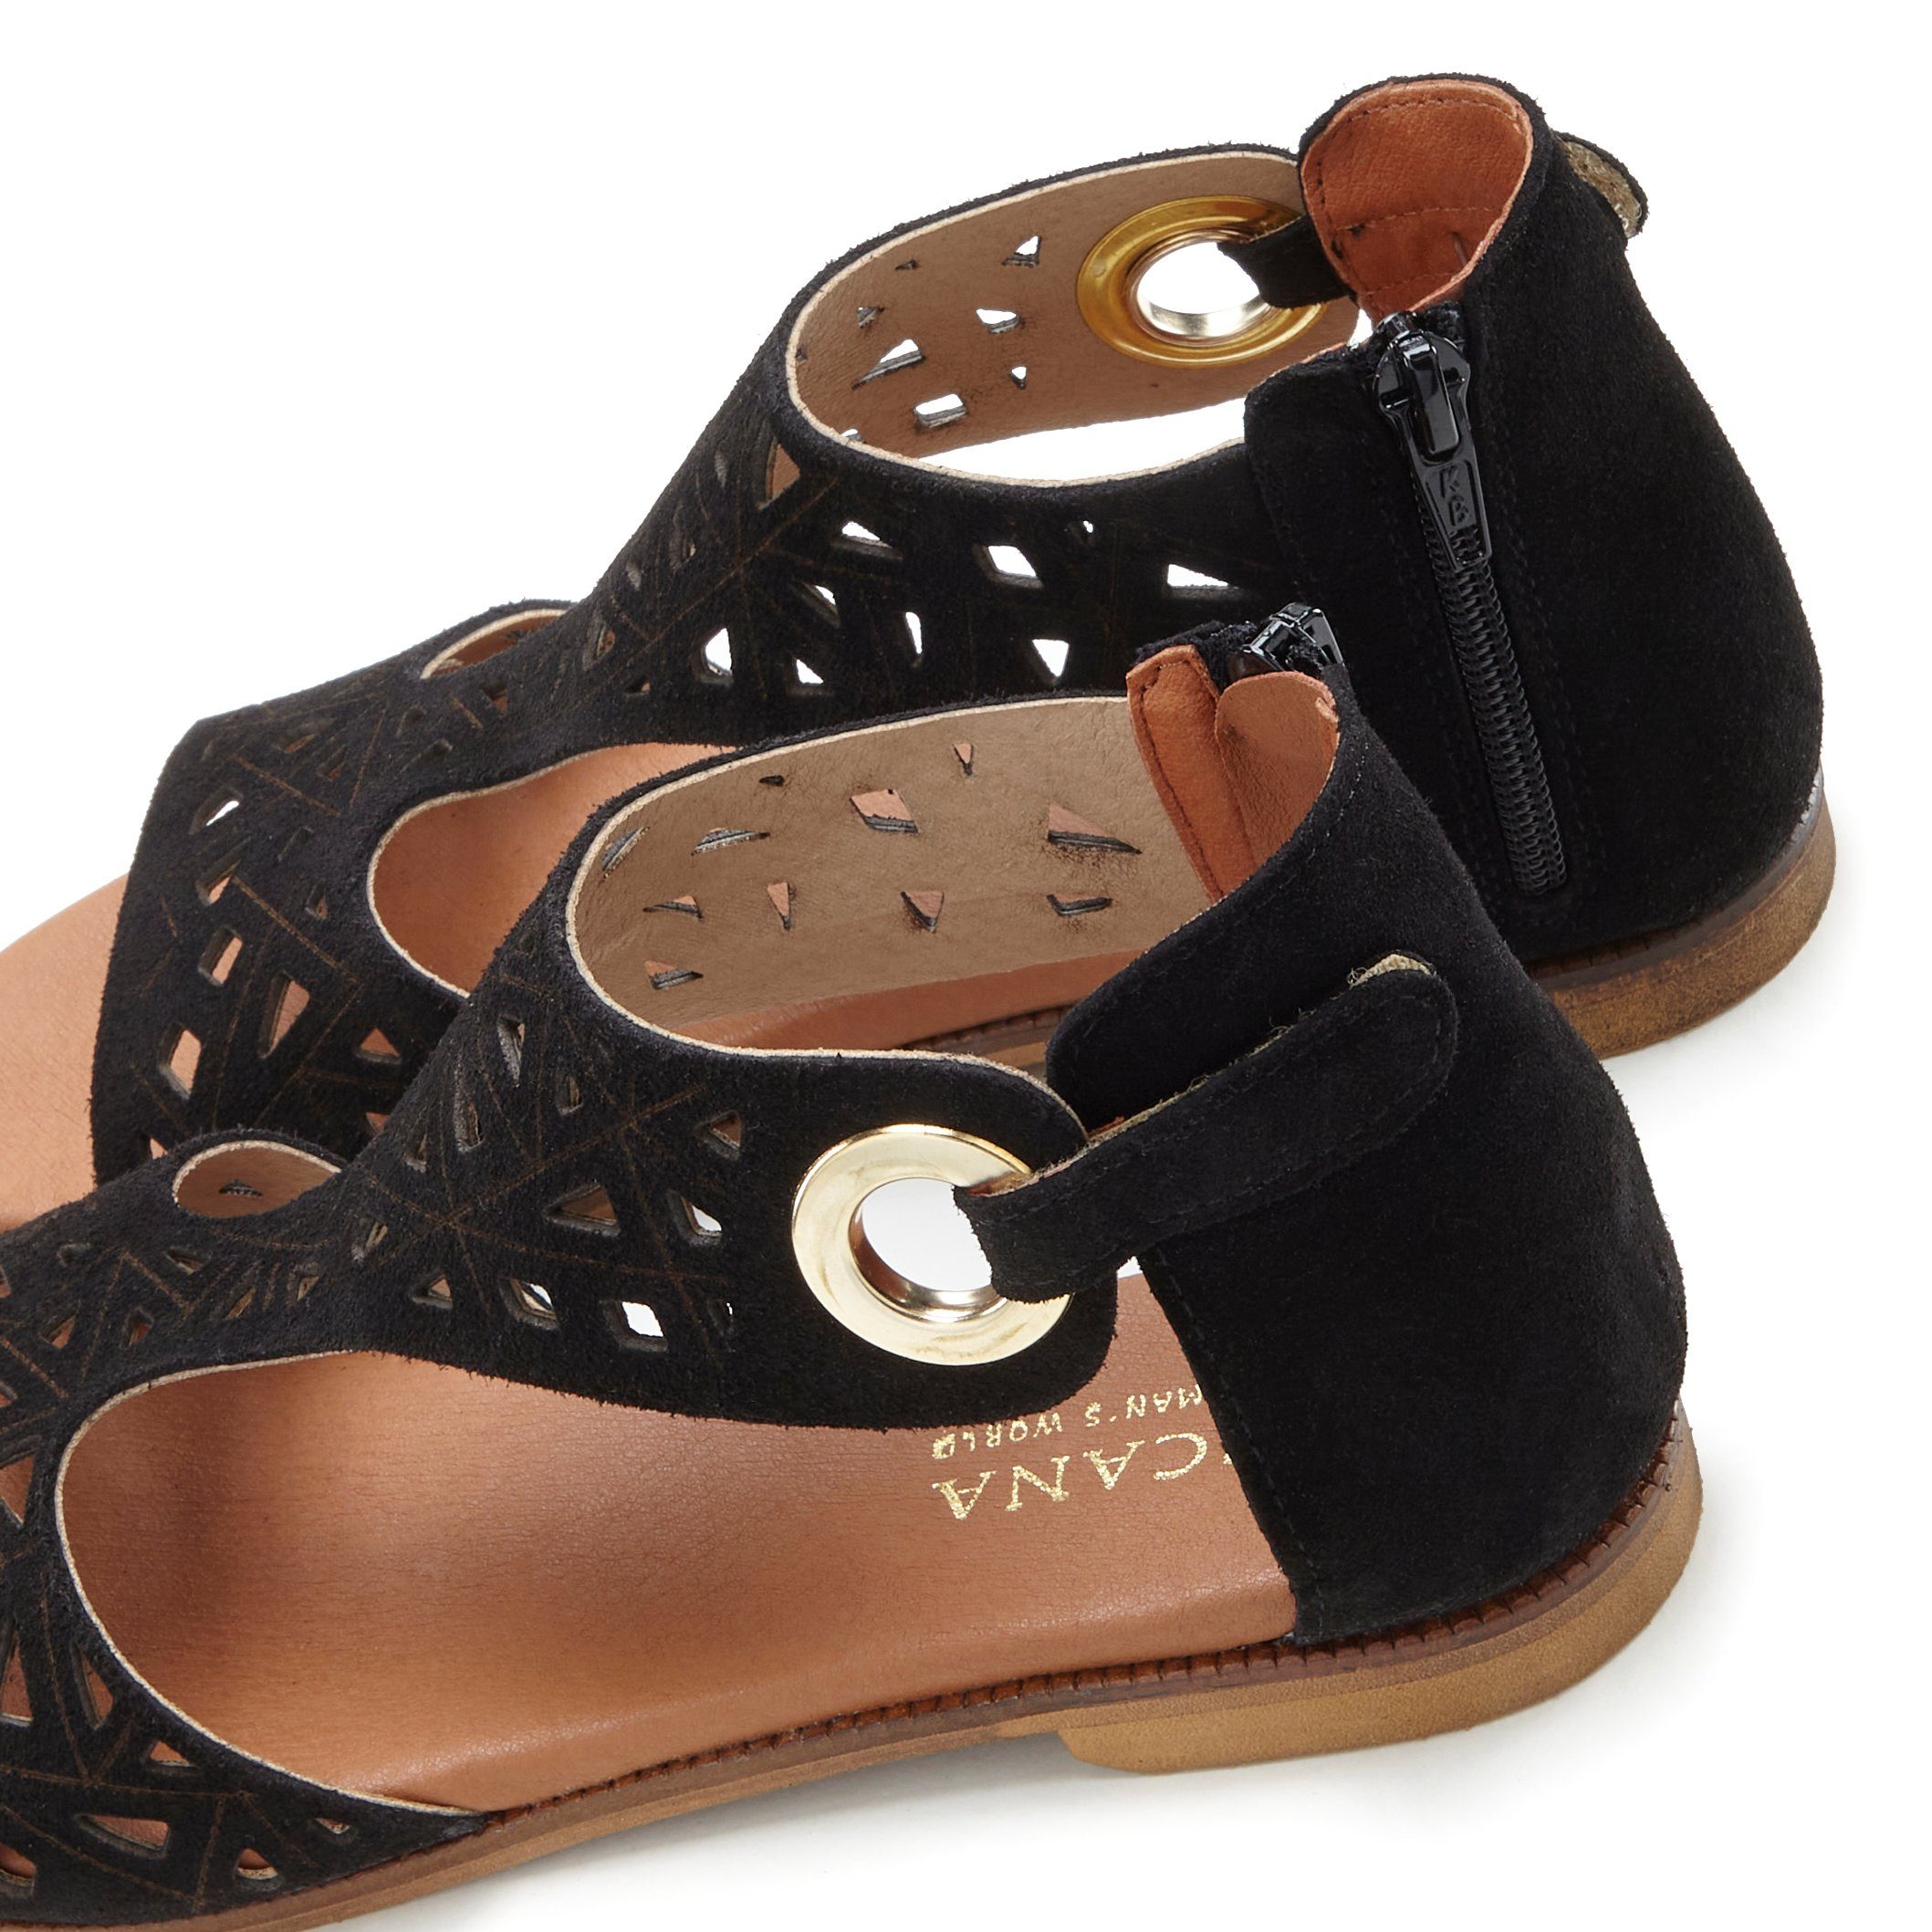 LASCANA Sandale Sandalette, hochwertigem Sommerschuh Leder schwarz aus Cut-Outs mit